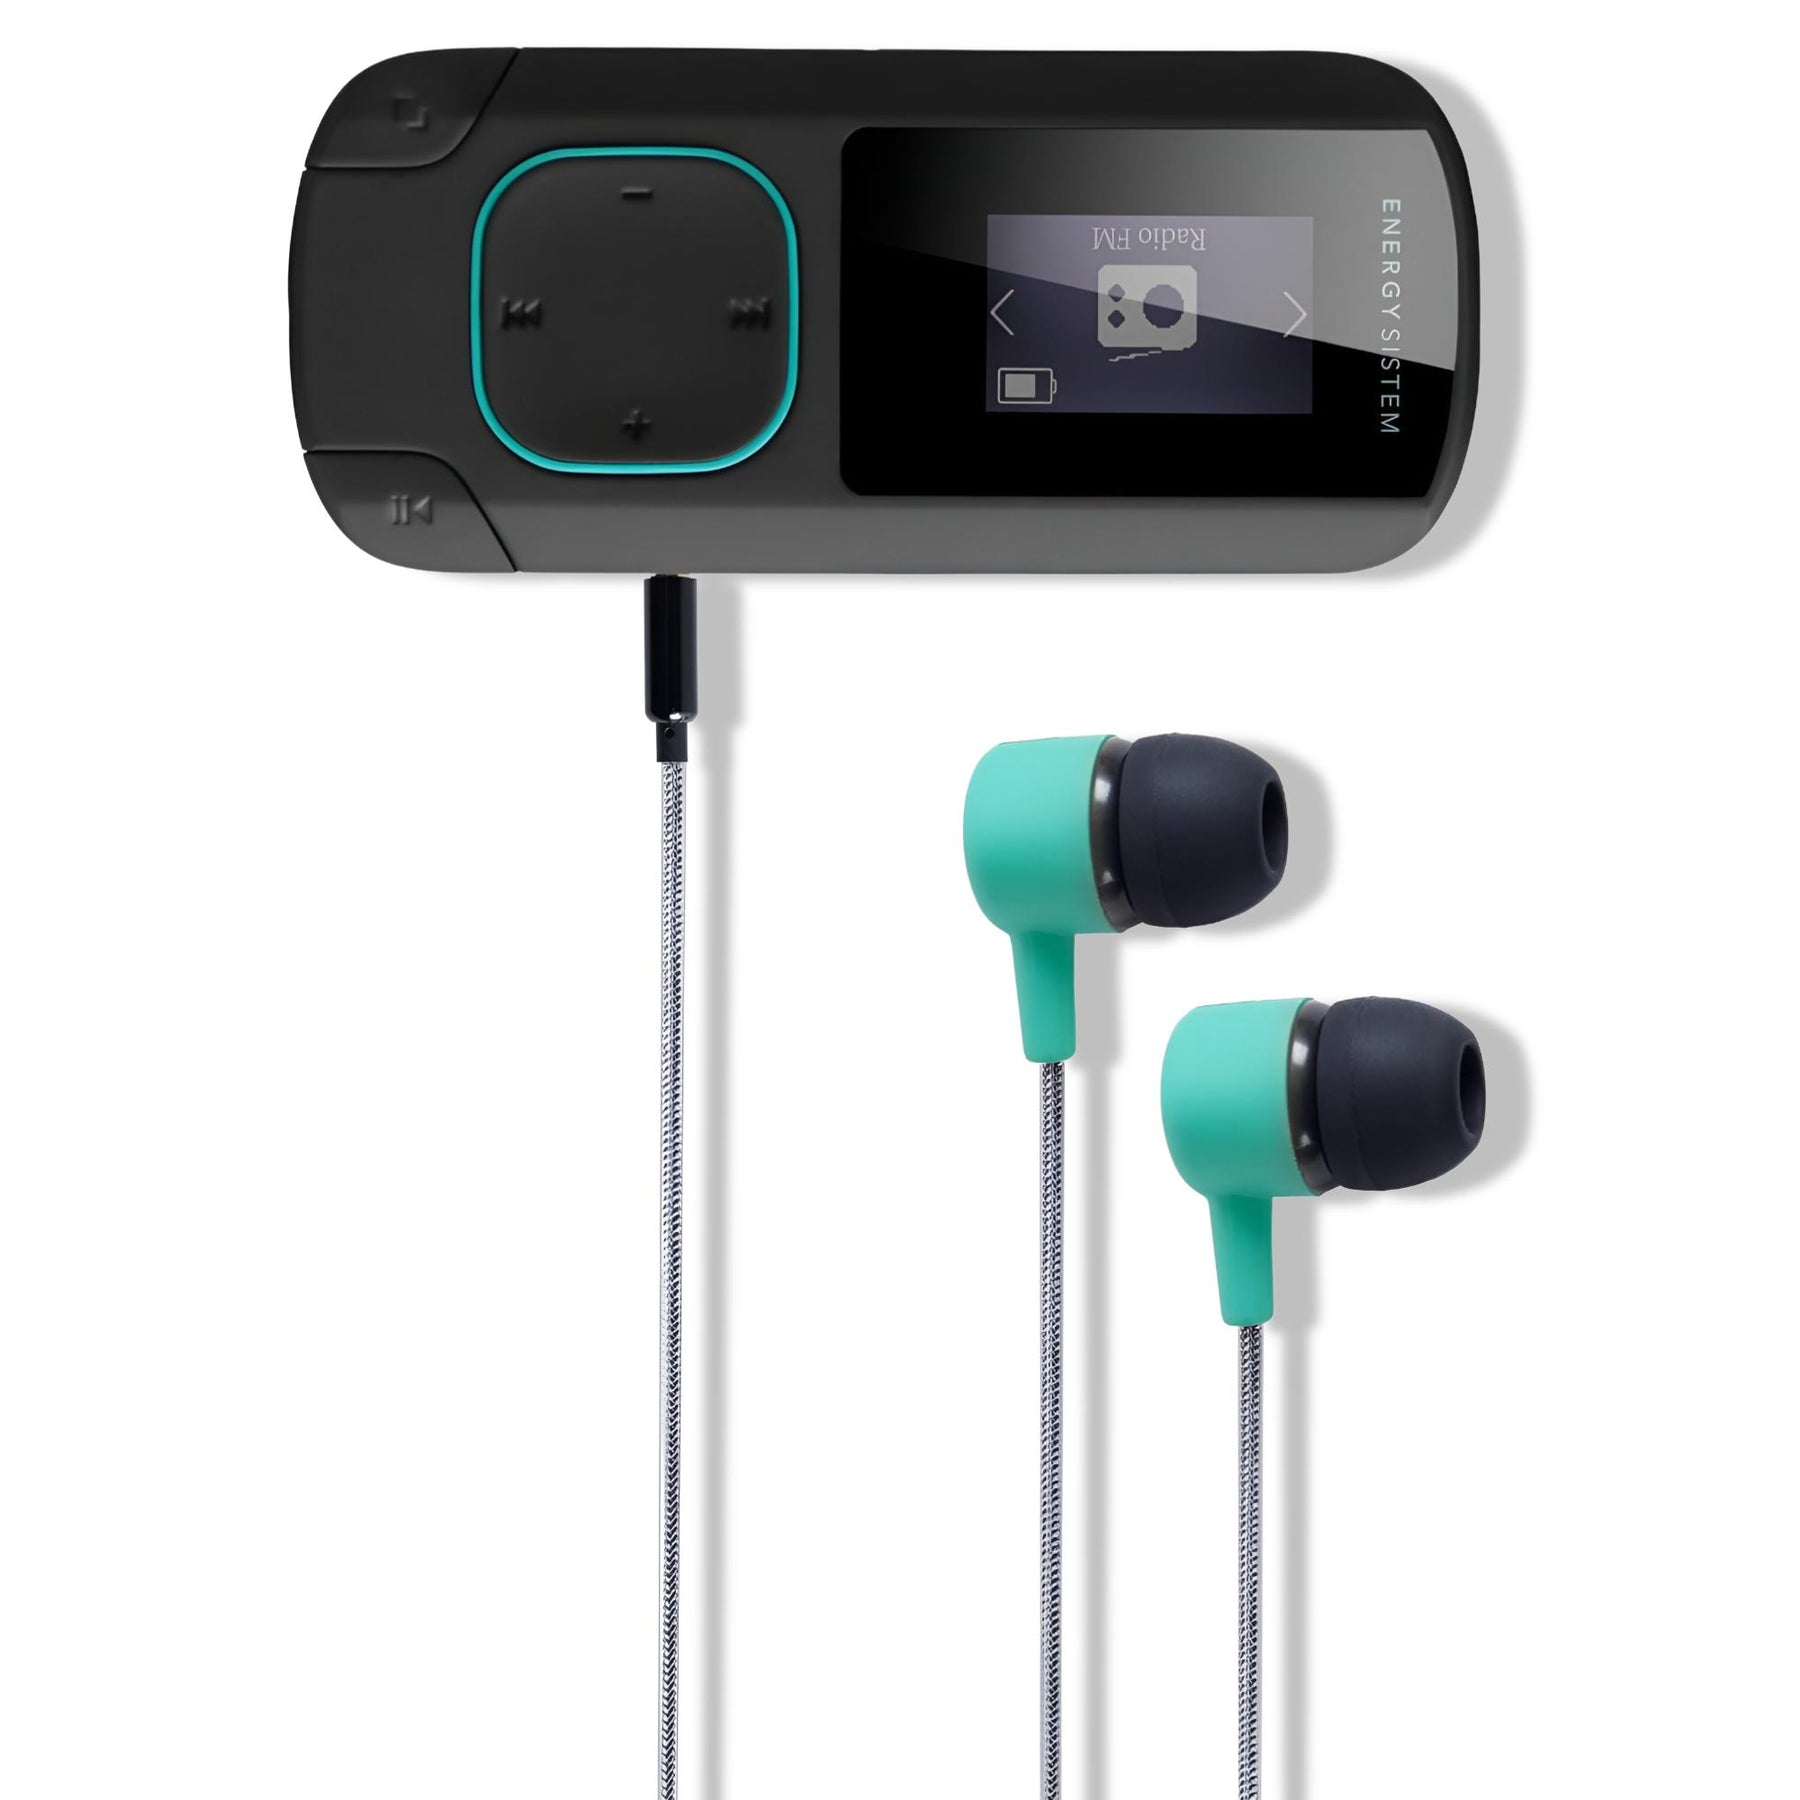  Reproductor MP3 Bluetooth con auriculares, clip